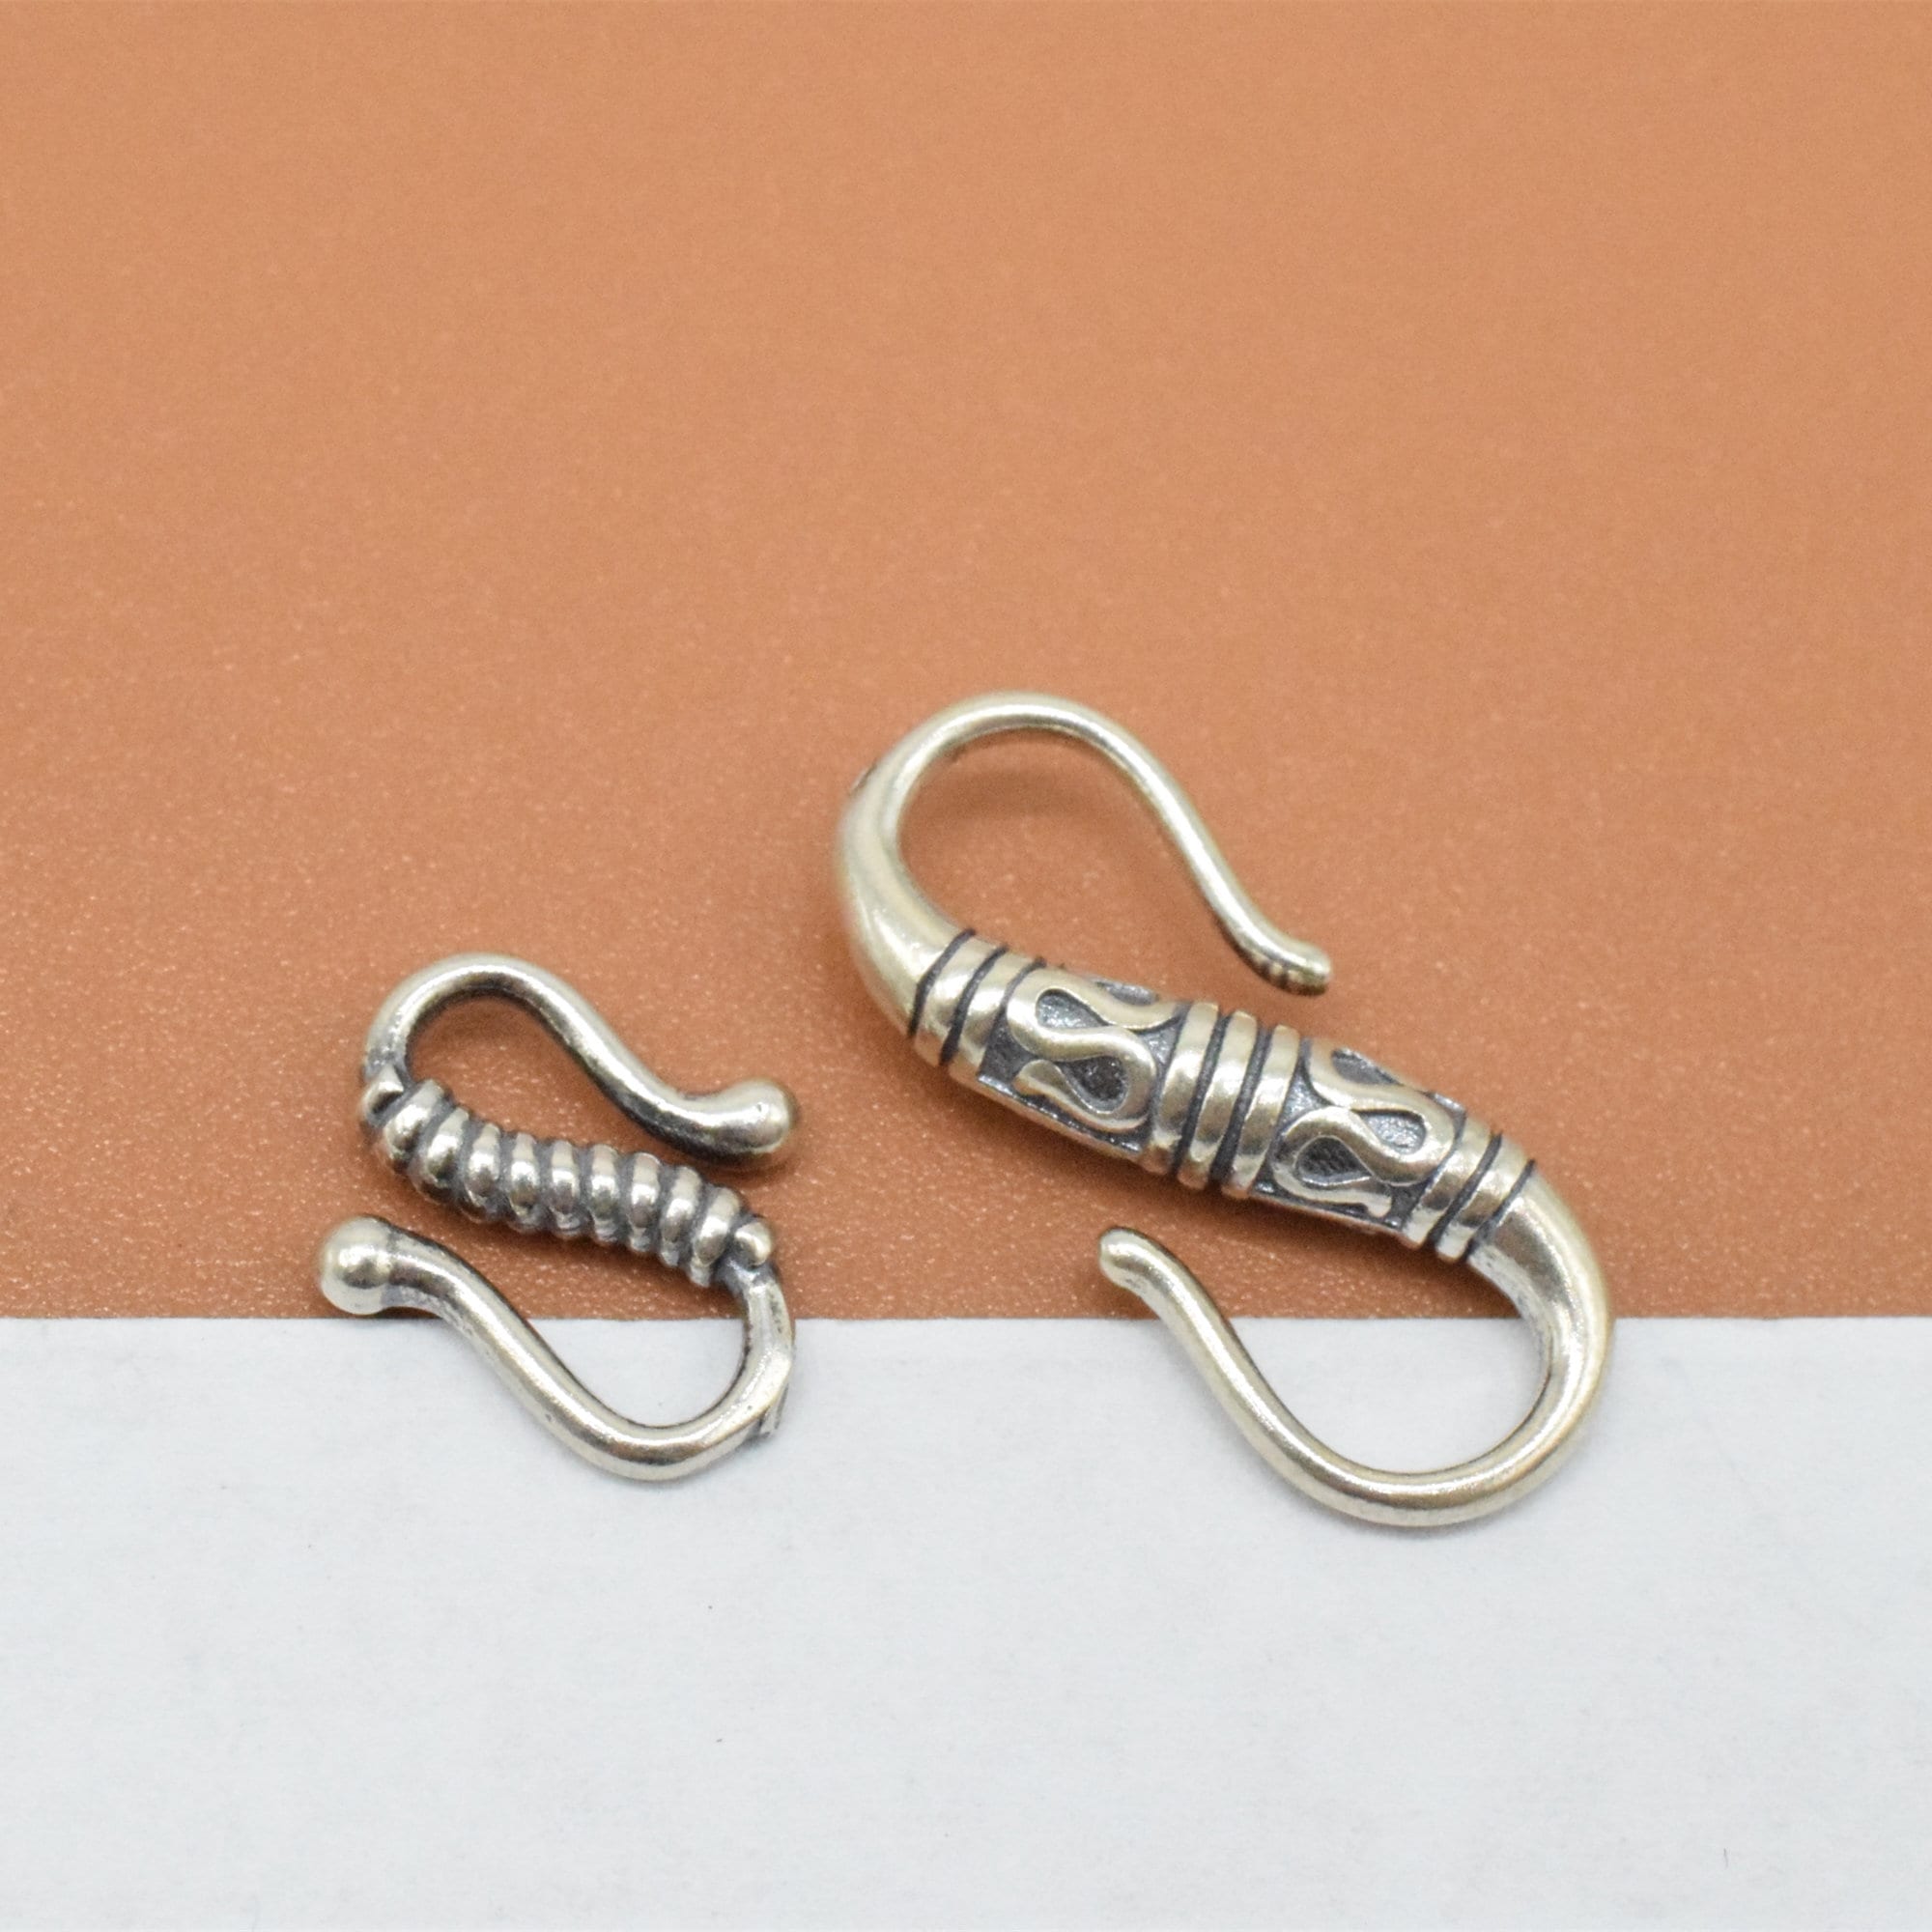 Box of Earrings Hooks and Open Jump Rings Set,earrings Clasps